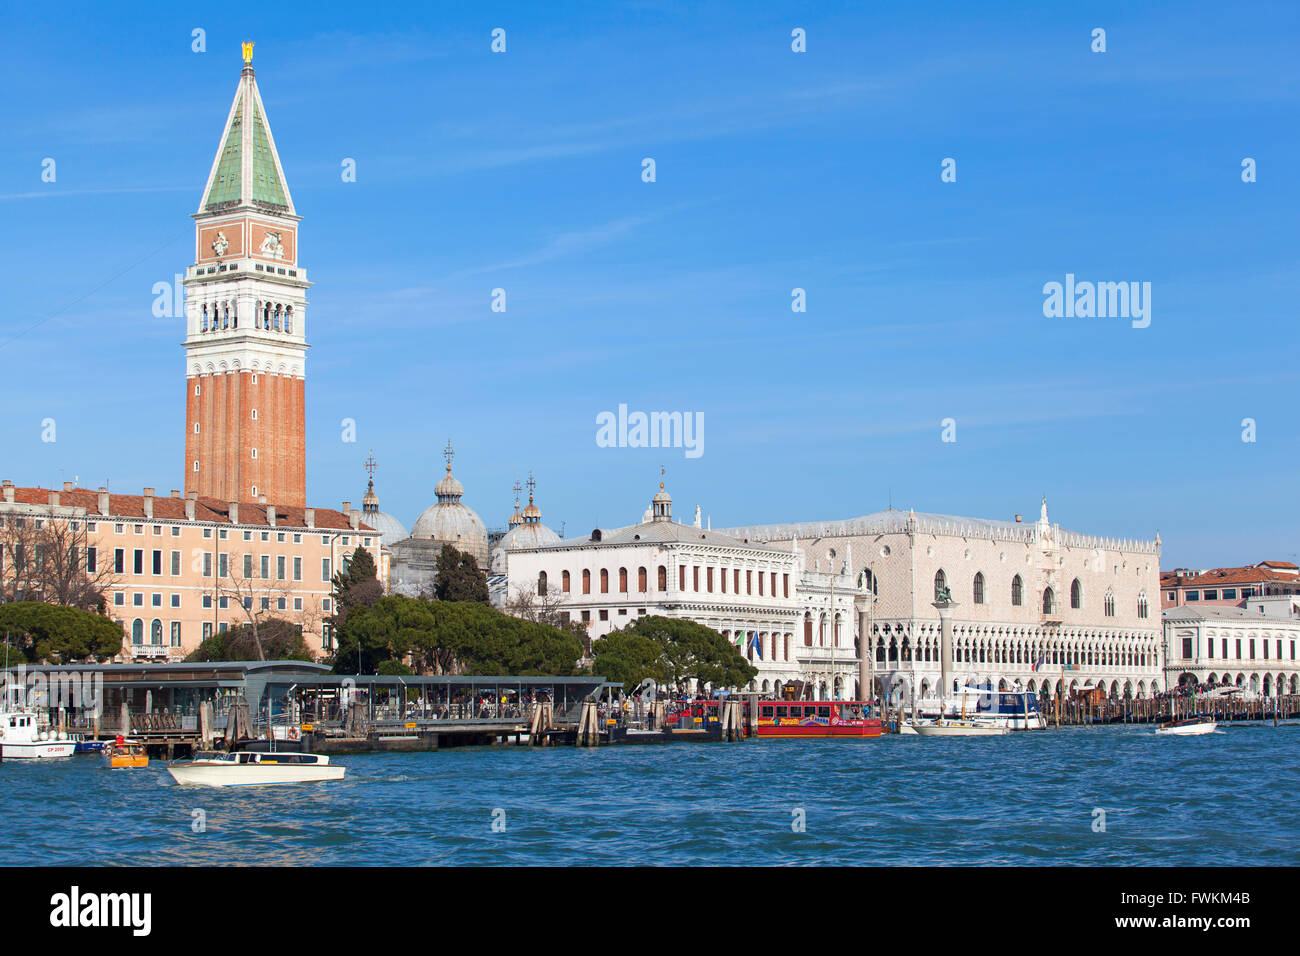 Blick auf den Dogenpalast, den Palazzo della Zecca und den Markusturm vom Canal Grande aus, Venedig, Venetien, Italien. Stockfoto